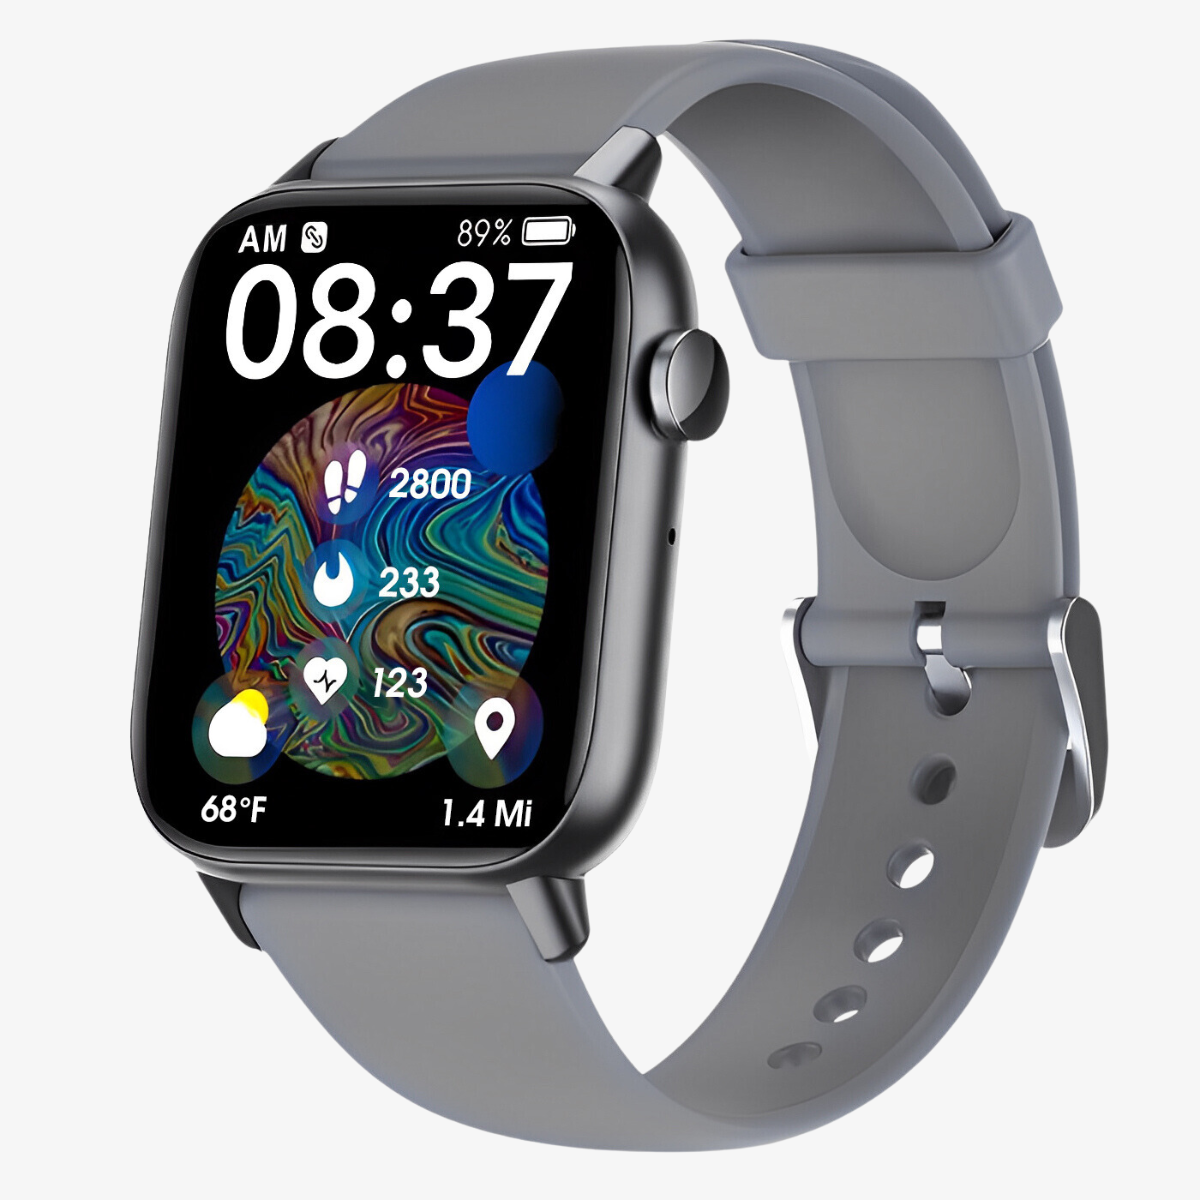 Gard Pro Health Smartwatch 2+ - Grey